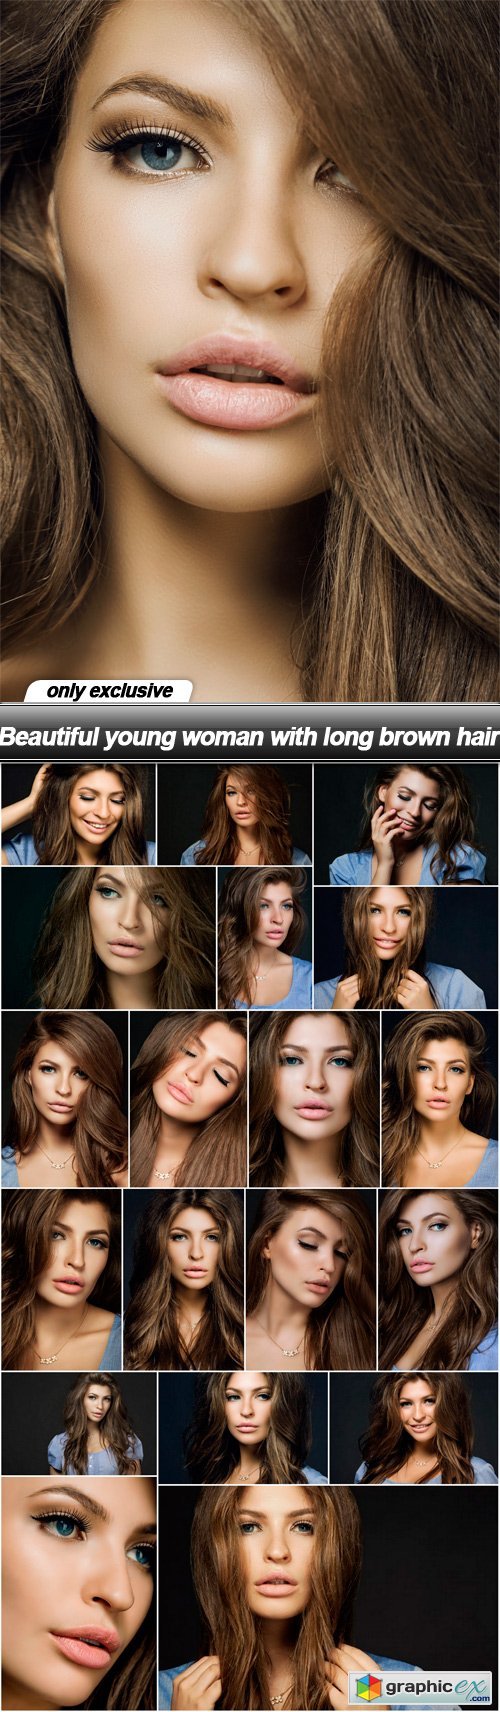 Beautiful young woman with long brown hair - 20 UHQ JPEG